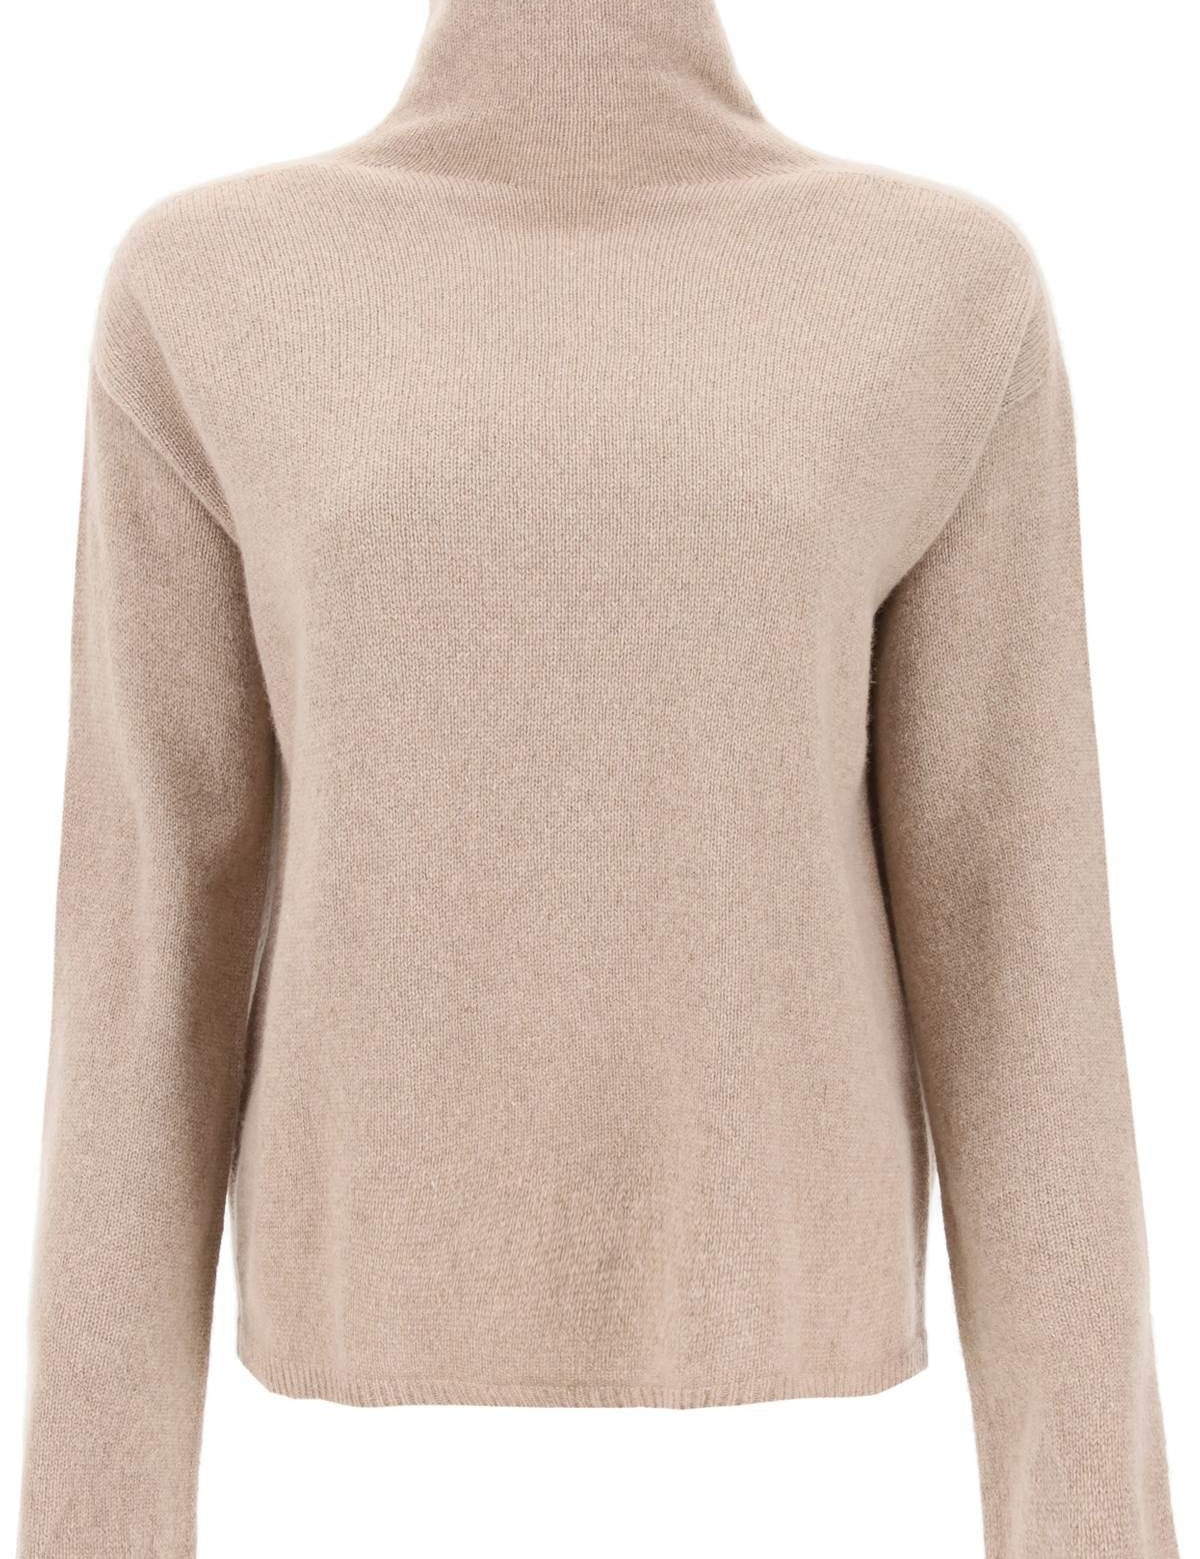 s-max-mara-baldo-cashmere-turtleneck-sweater.jpg